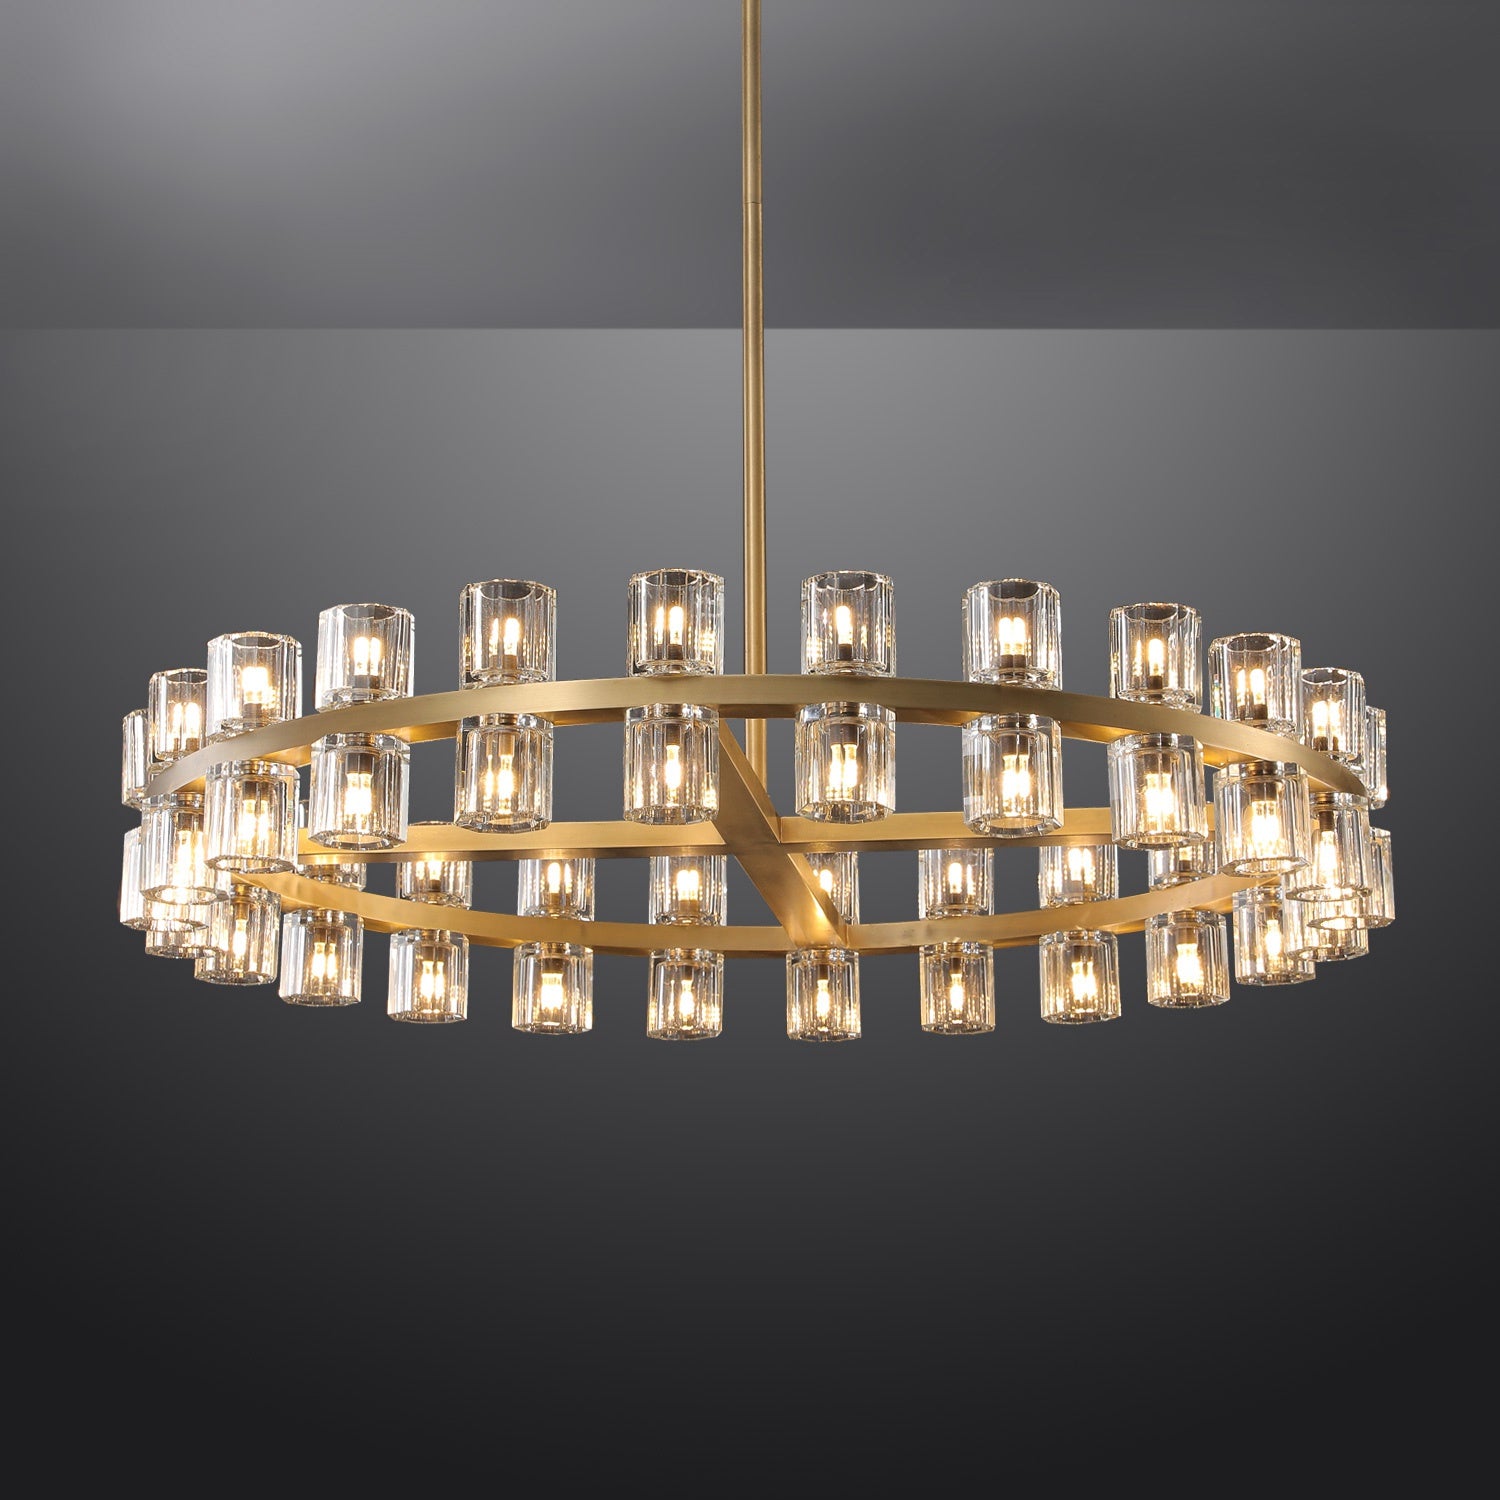 Aminda Modern Round Crystal Chandelier Light For Living Room 36", 48", 60" chandelier Kevin Studio Inc 36" Lacquered Burnished Brass 